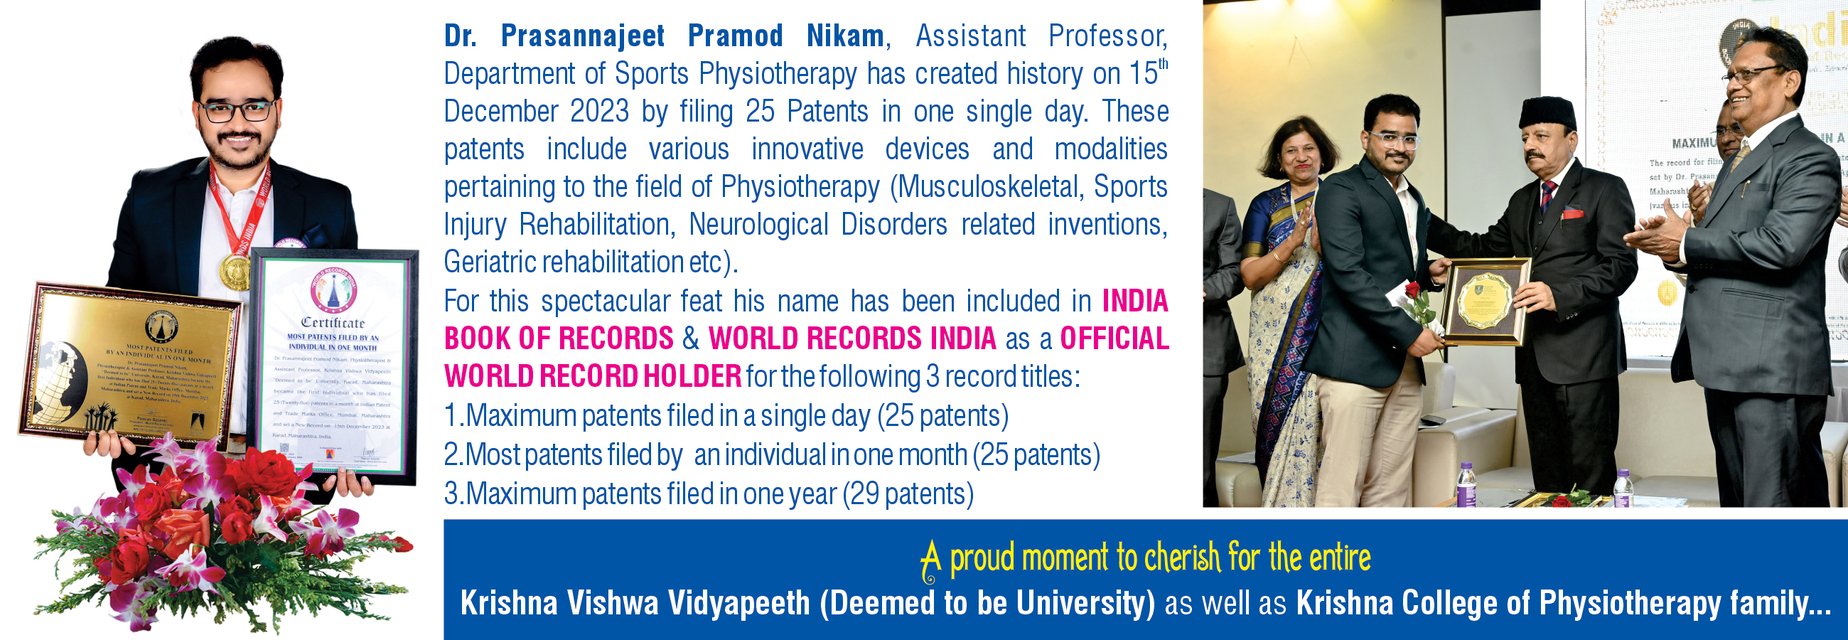 Dr.Prasannajeet Pramod Nikam, Assistant Professor, Department of Sports Physiotherapy